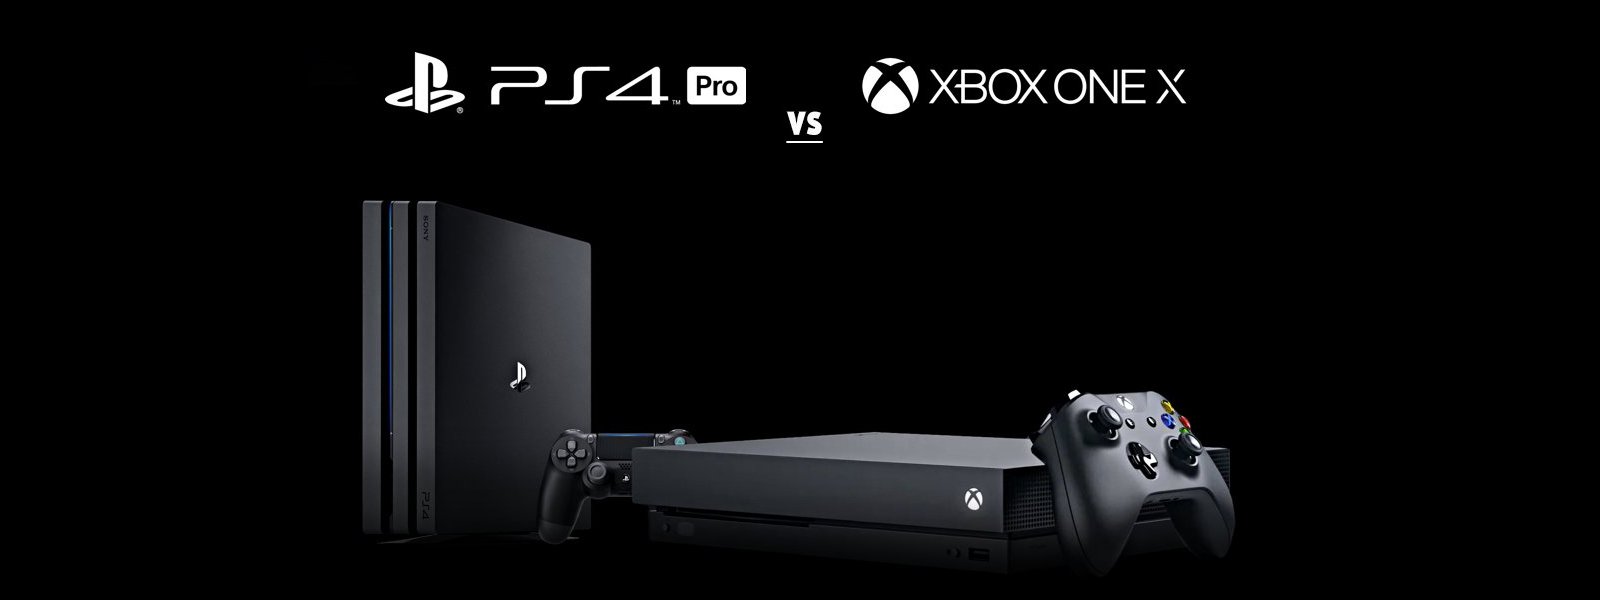 imperium Amazon Jungle Grusom Xbox One X vs PS4 Pro - Which 4K/HDR Gaming Console Reigns Supreme? |  FinalBoss